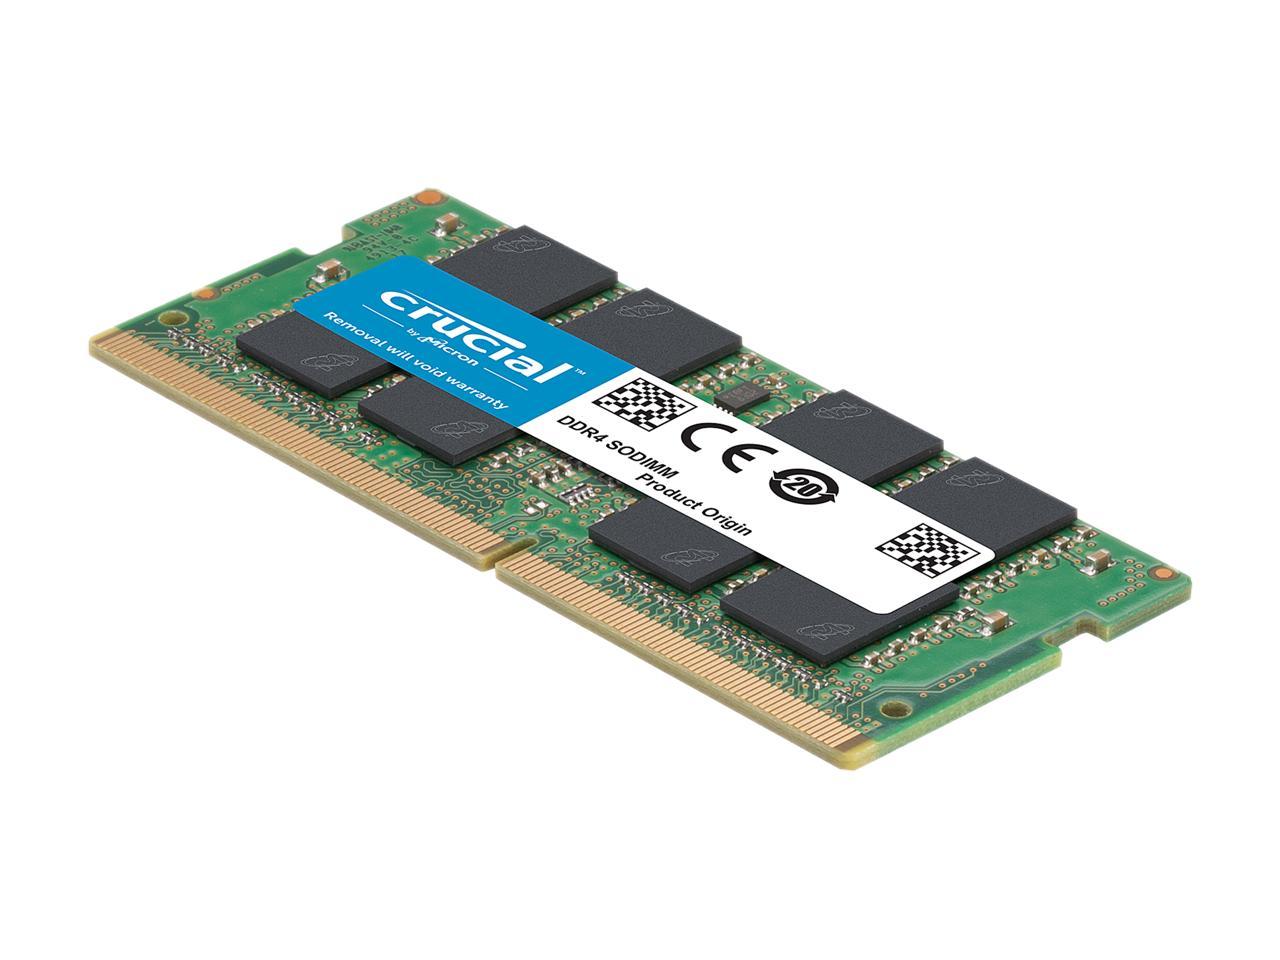 Crucial 32GB (2 x 16GB) 260-Pin DDR4 SO-DIMM DDR4 3200 (PC4 25600) Laptop  Memory Model CT2K16G4SFD832A